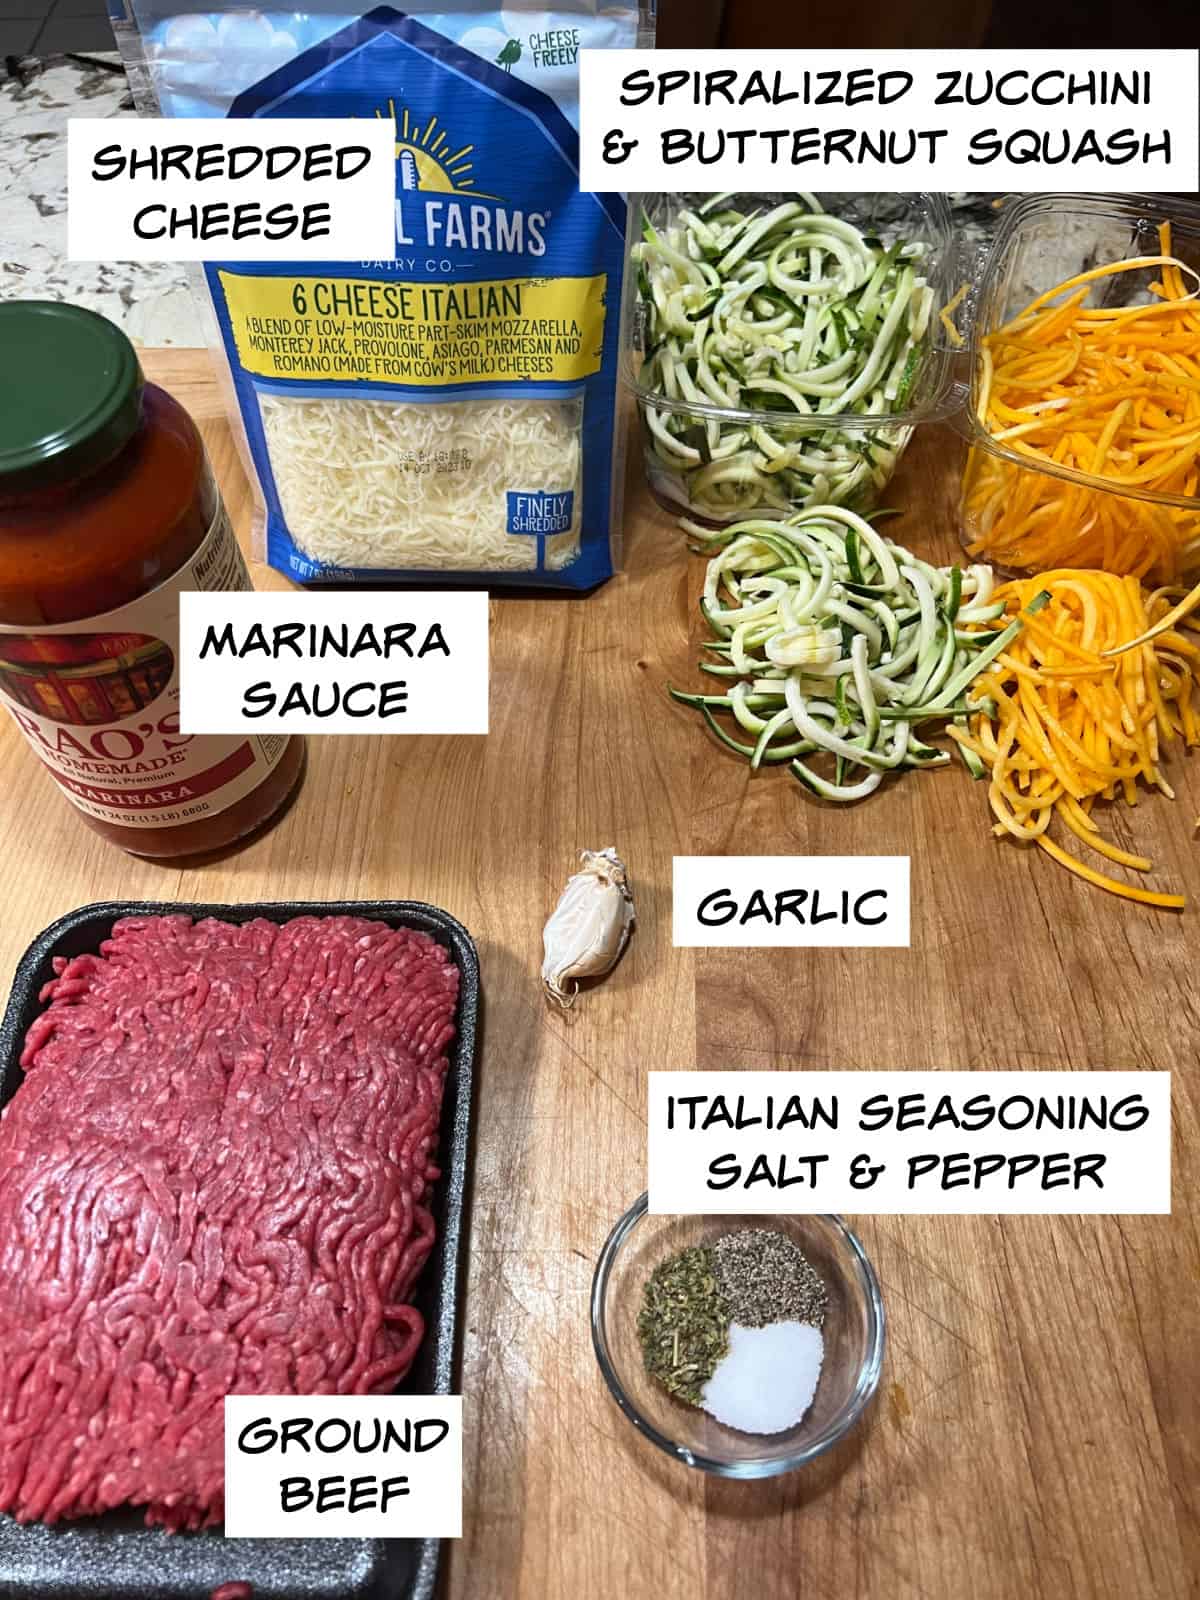 Ingredients: shredded cheese, spiralized squash, garlic, marinara sauce, ground beef, Italian seasoning, and salt and pepper.